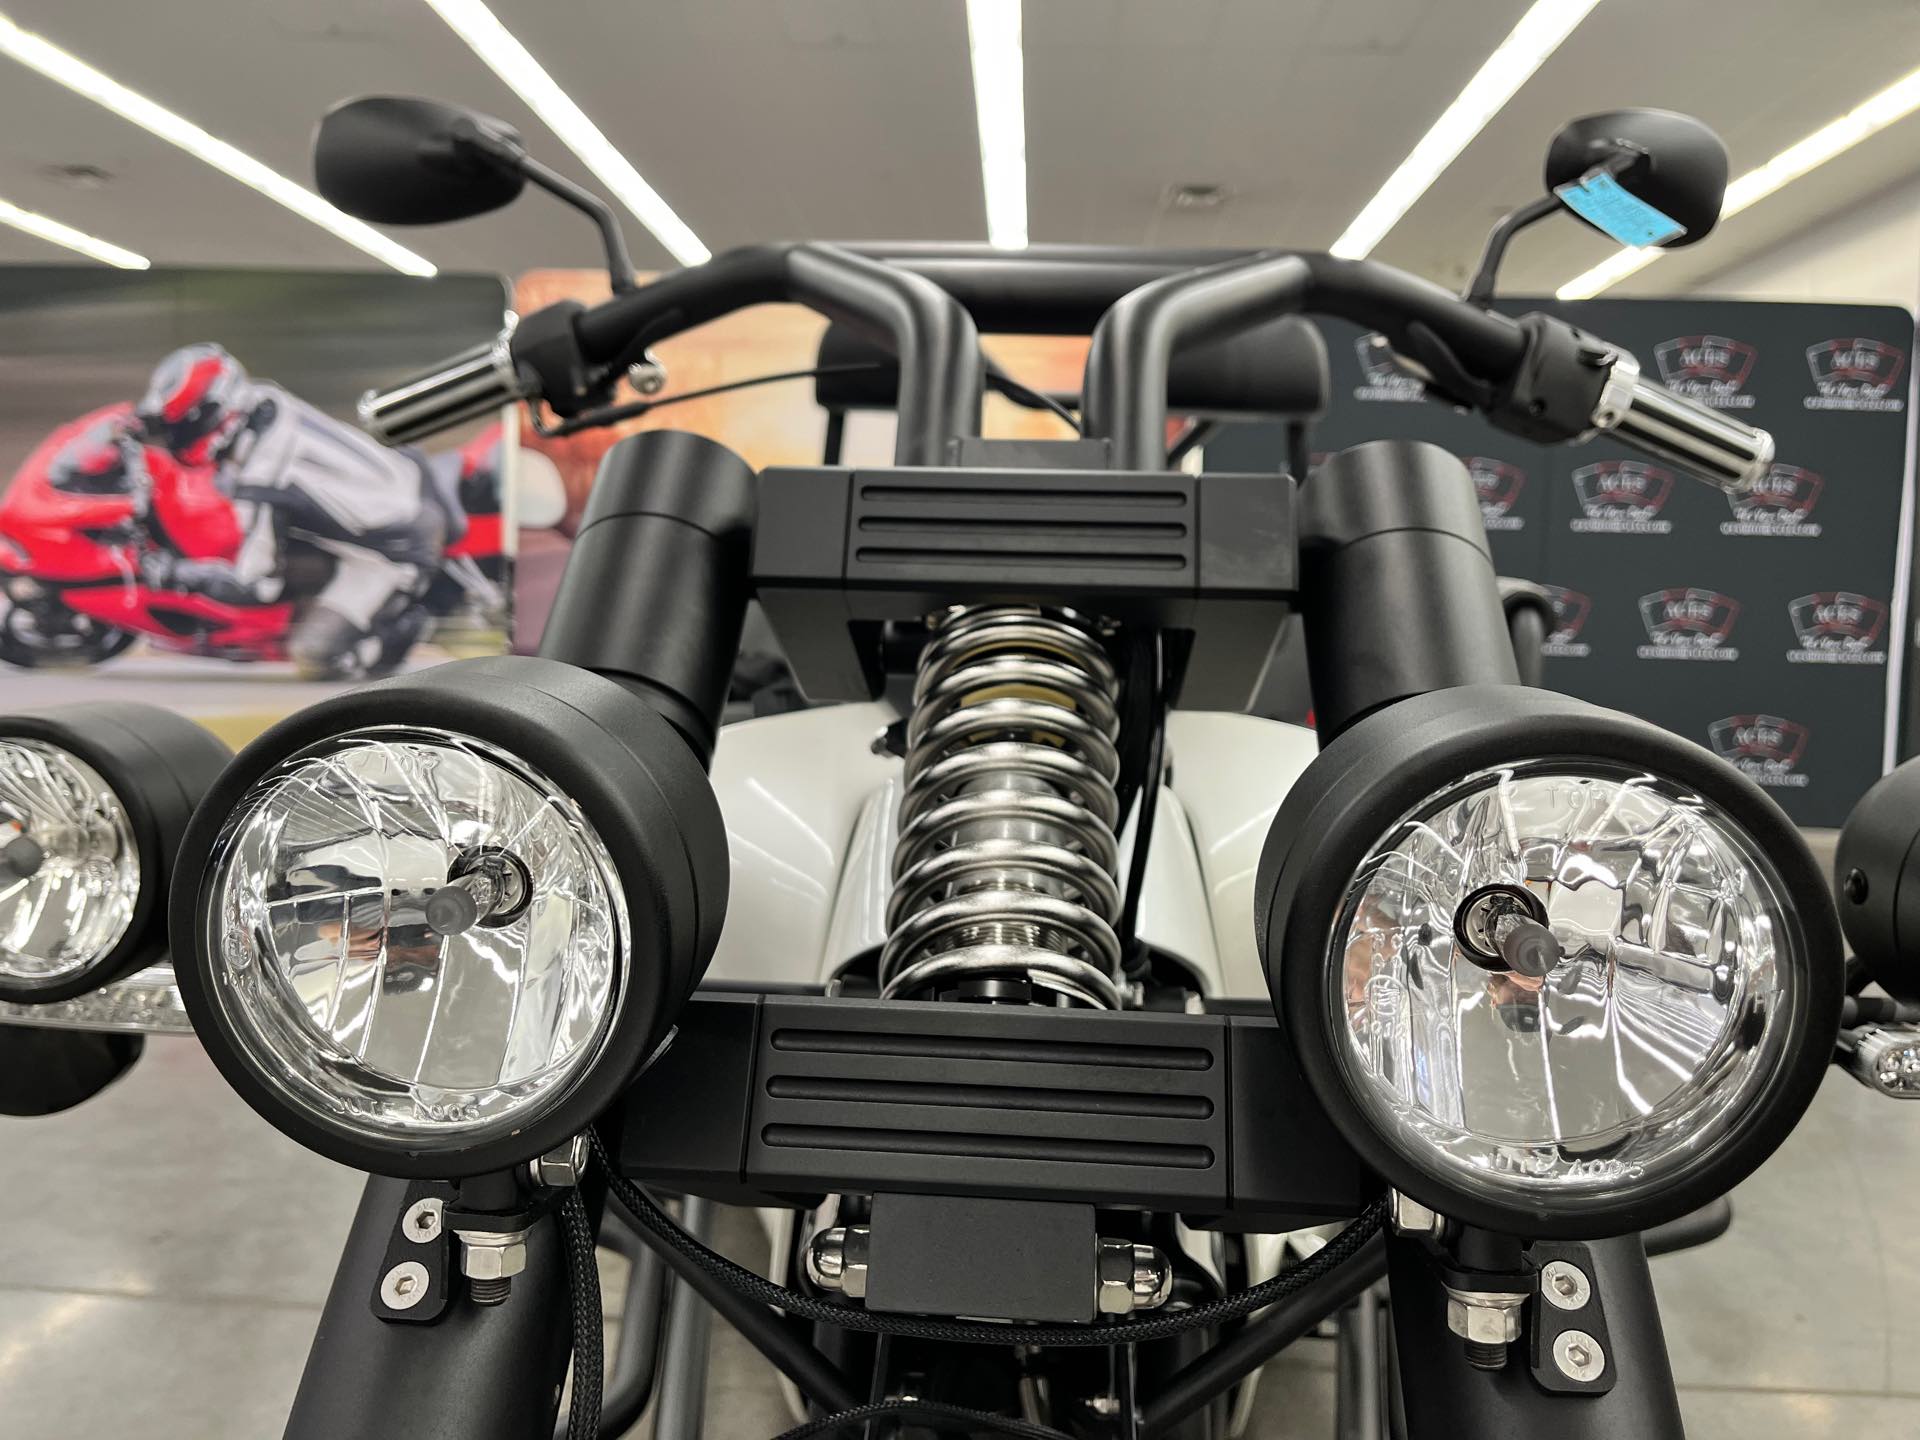 2022 REWACO ST-3 Turbo w Blackline pkg at Aces Motorcycles - Denver